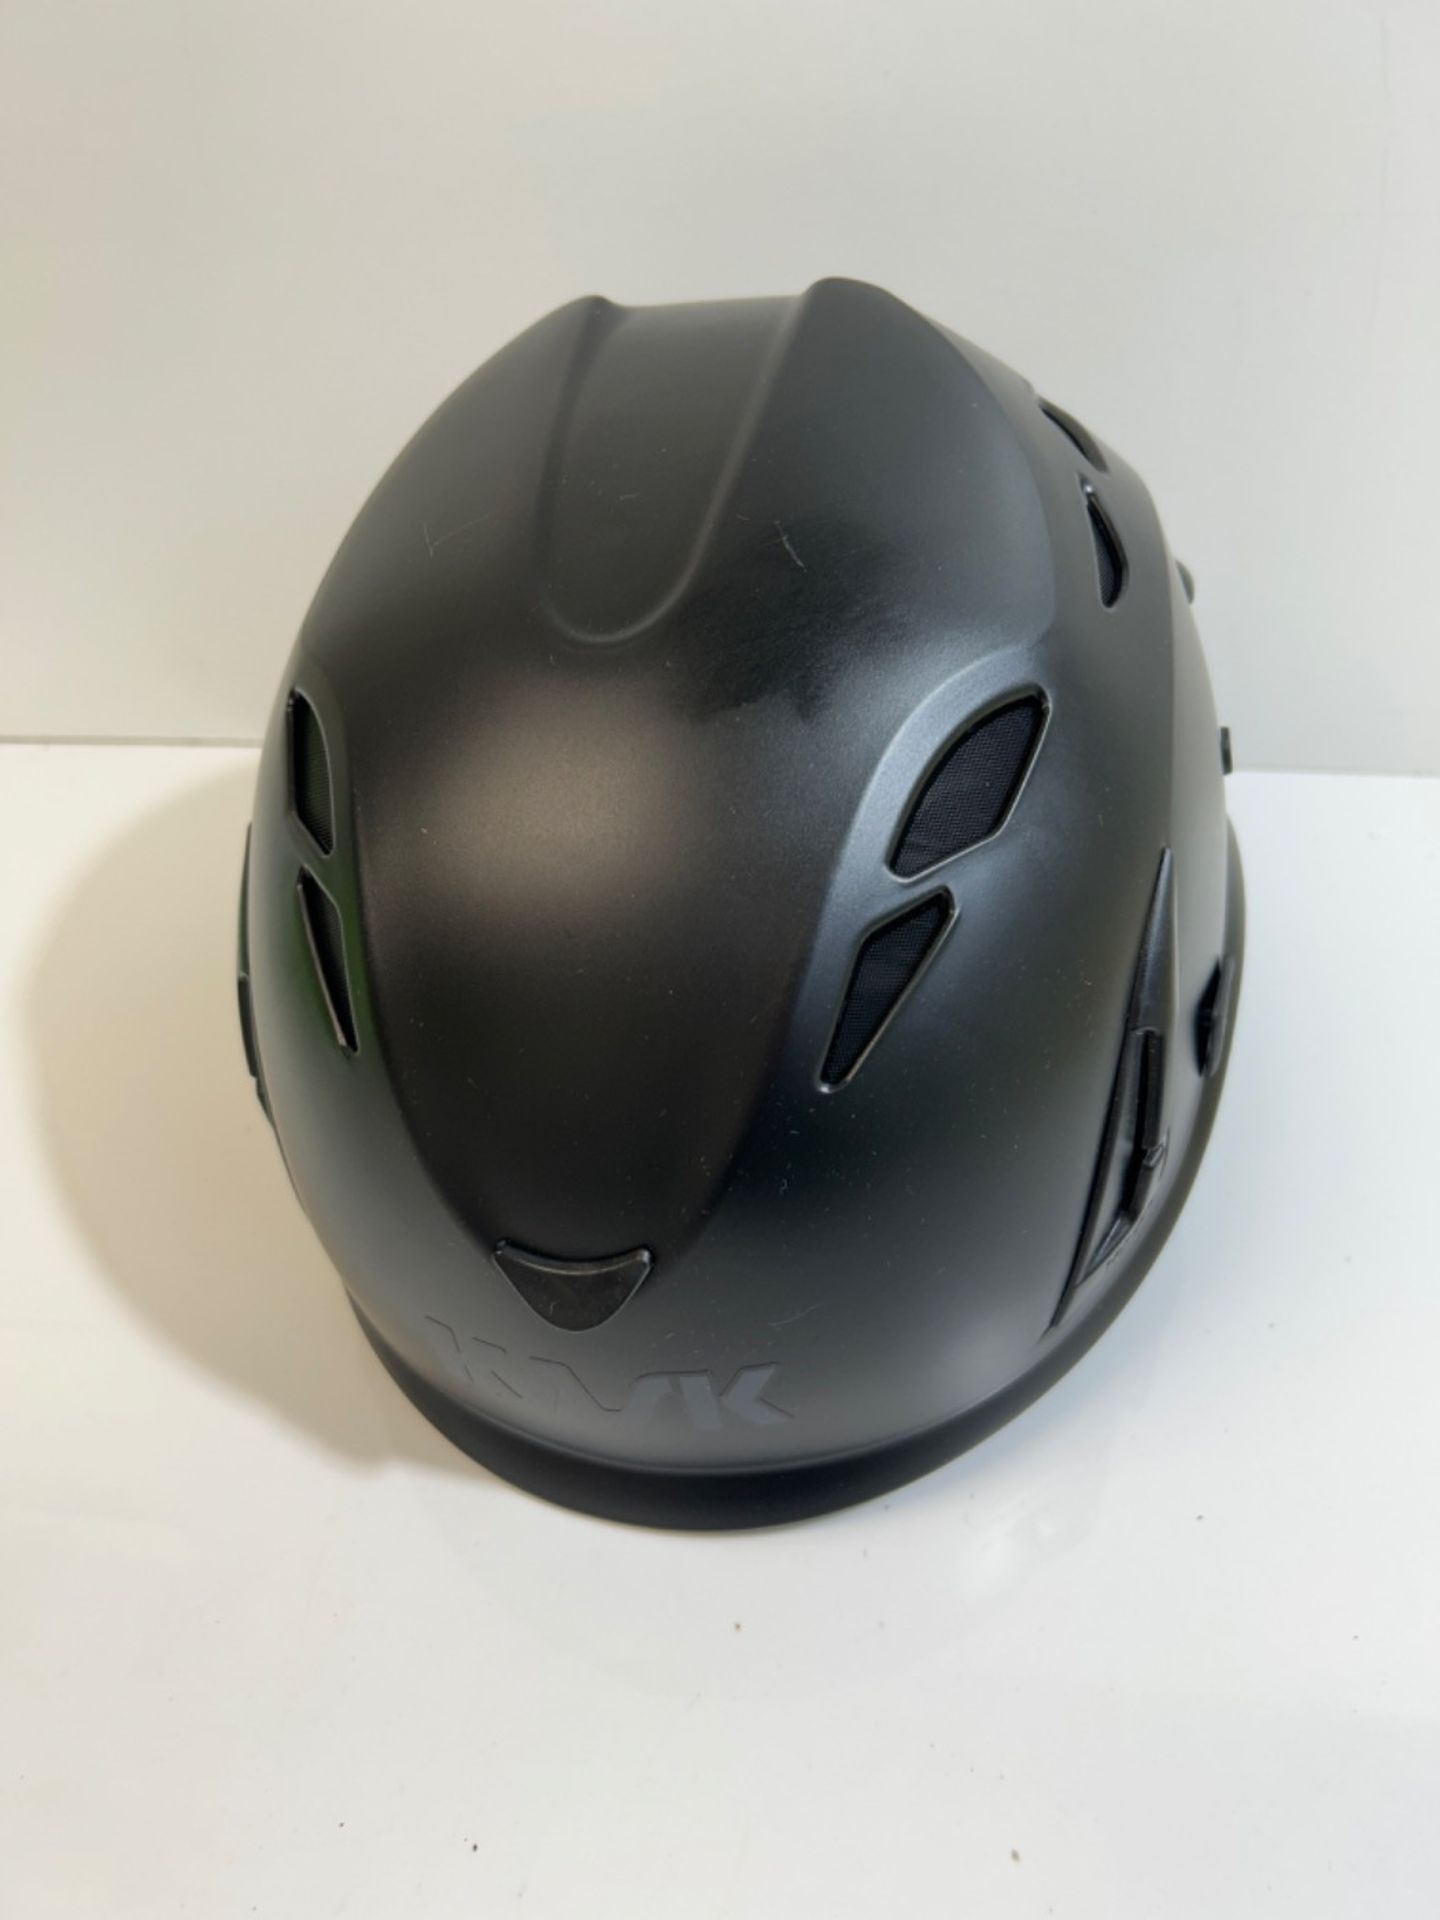 Kask WHE00008-210 Size 51-63 cm "Plasma Aq" Helmet - Black - Image 3 of 3